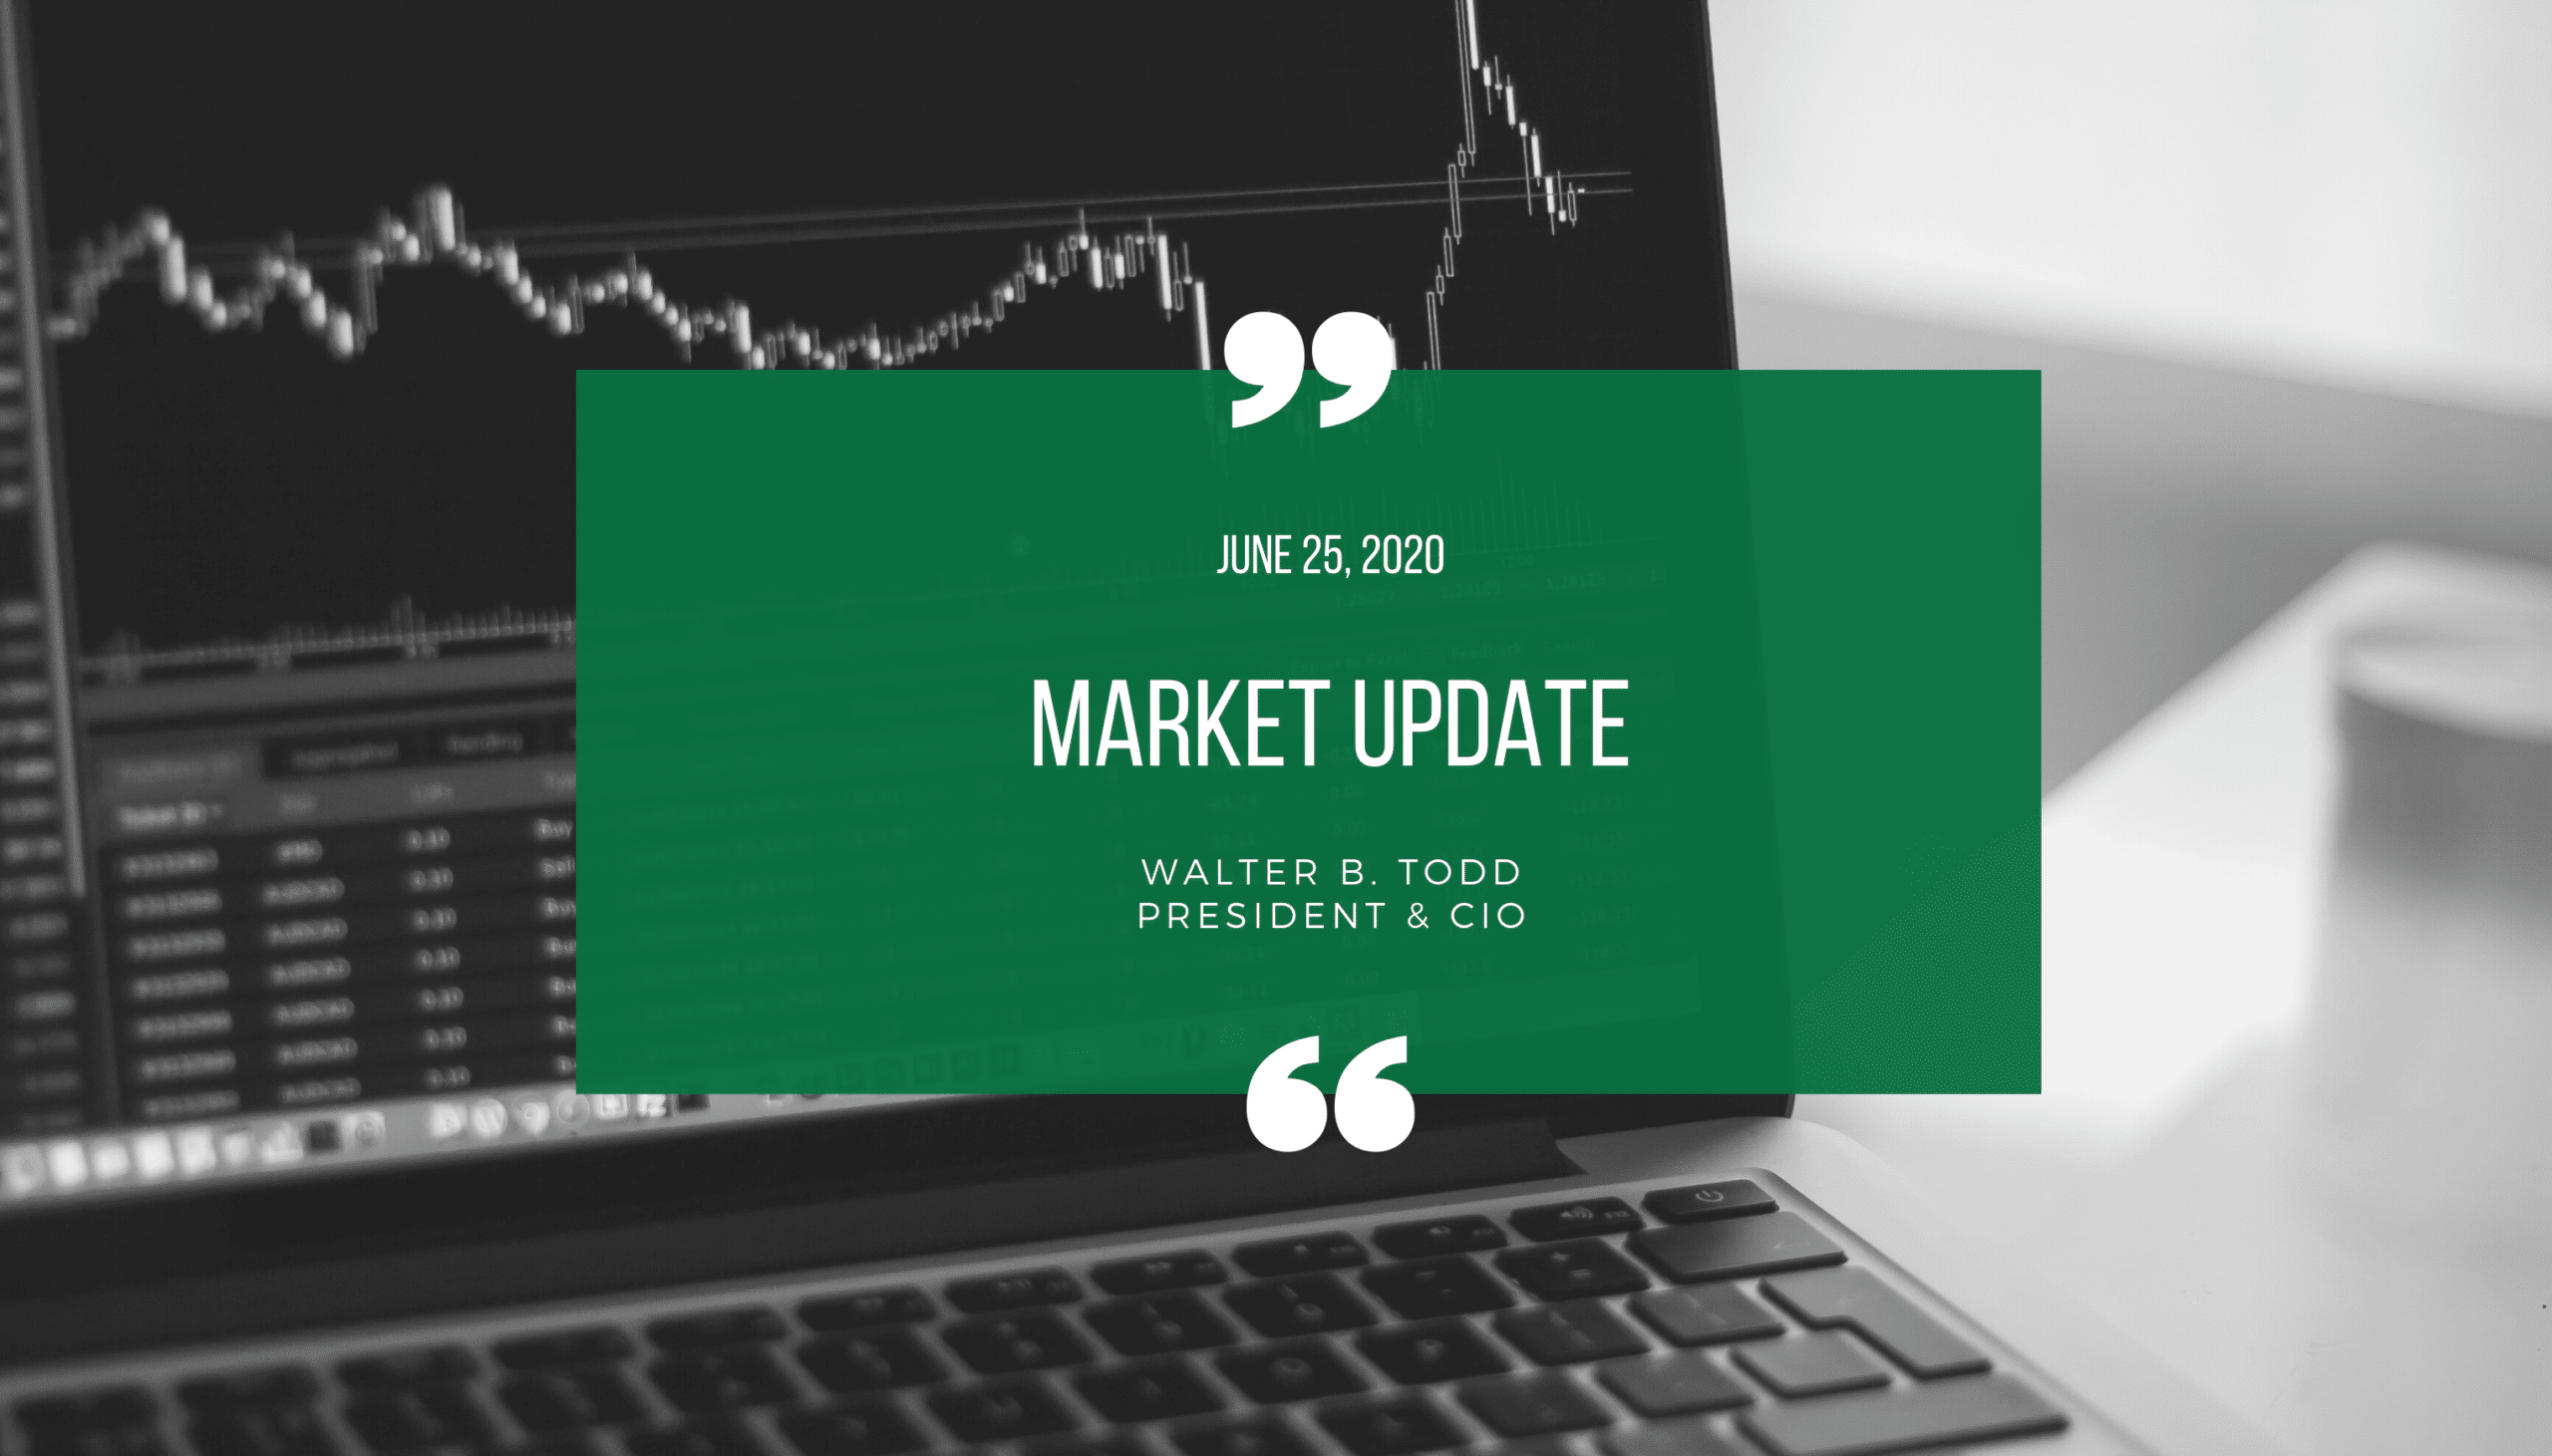 Market Update from Walter Todd